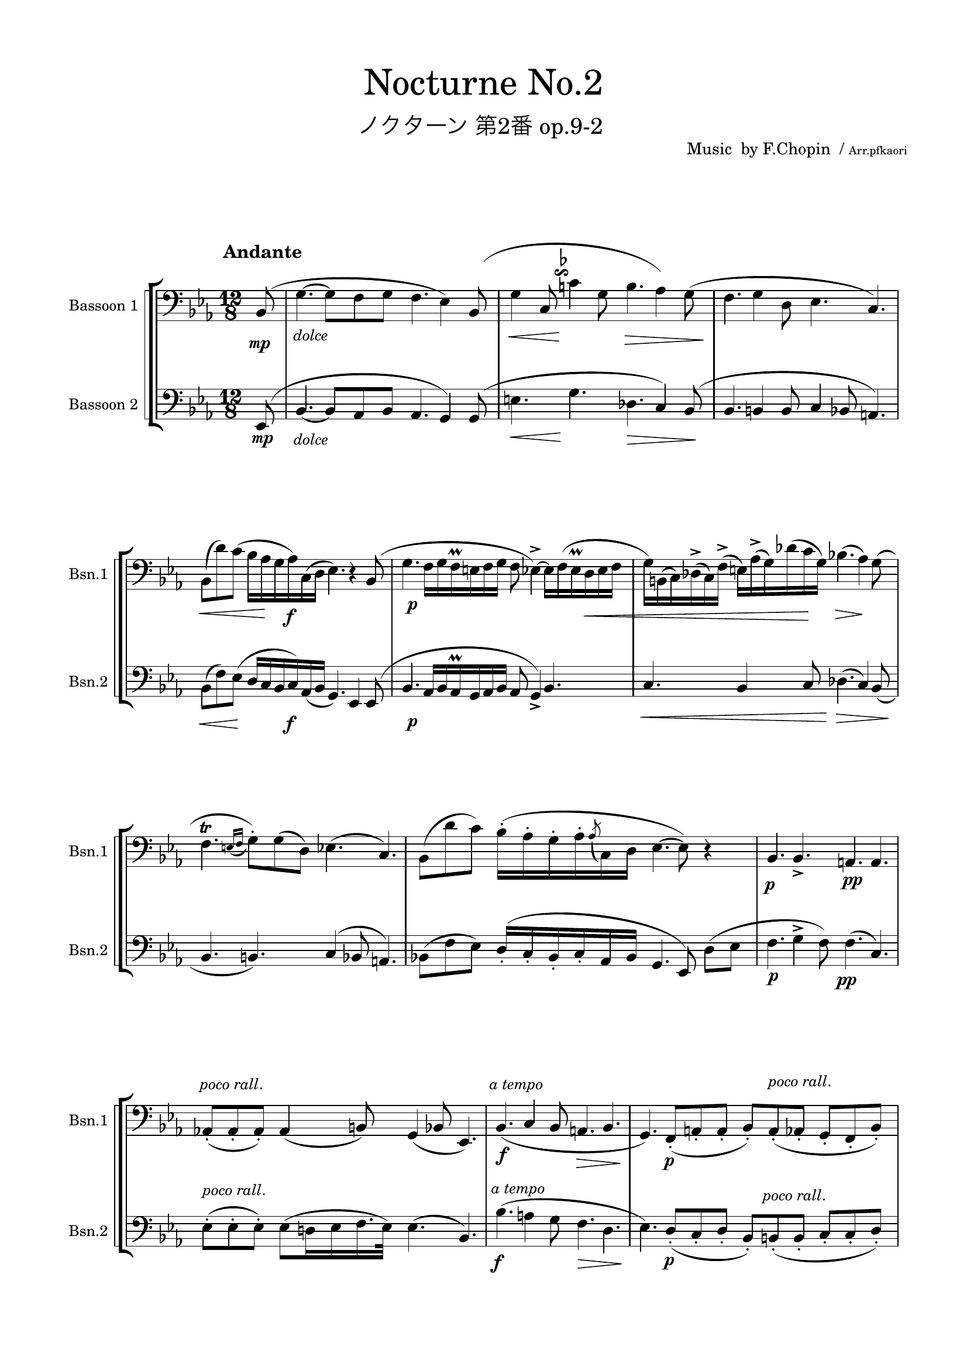 chopin - Nocturne No. 2 (1ver,Bassoon duo/unaccompanied) by pfkaori